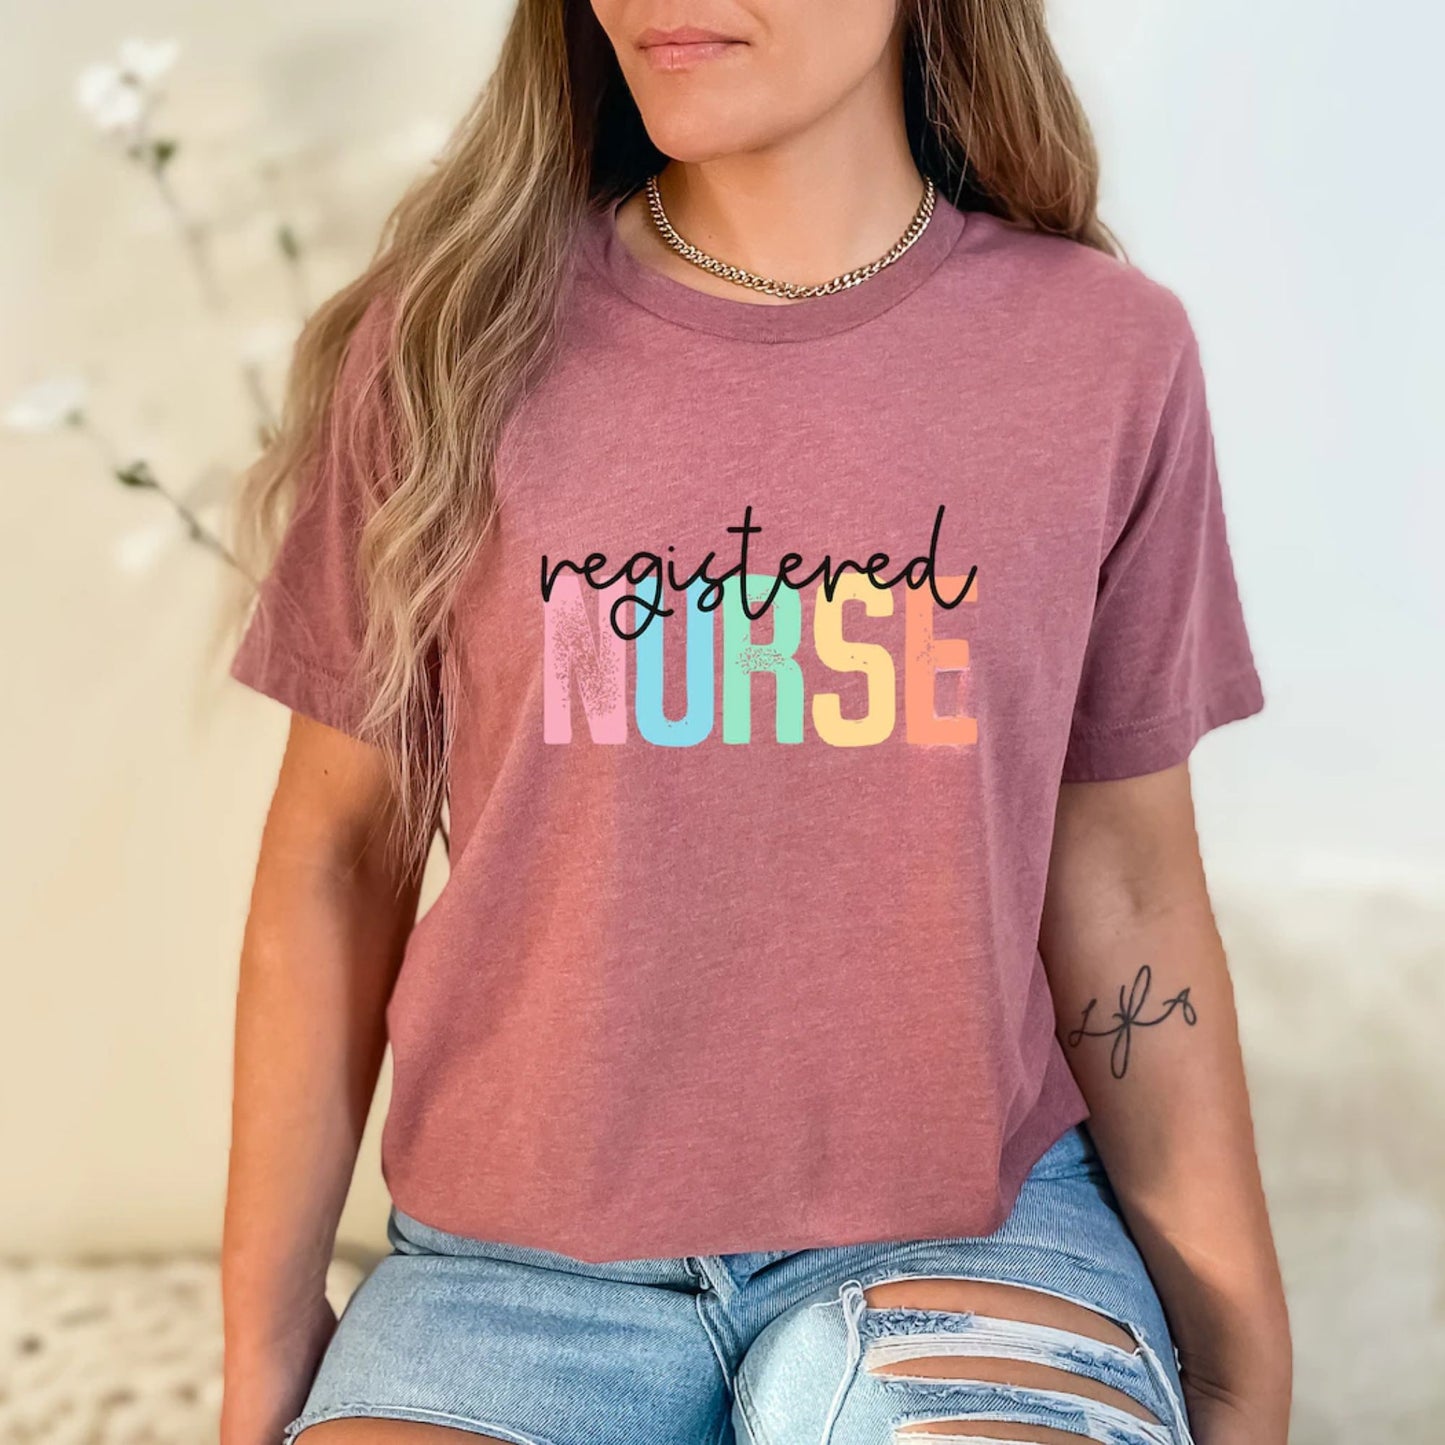 Registered Nurse Shirt - Gift for Registered Nurse